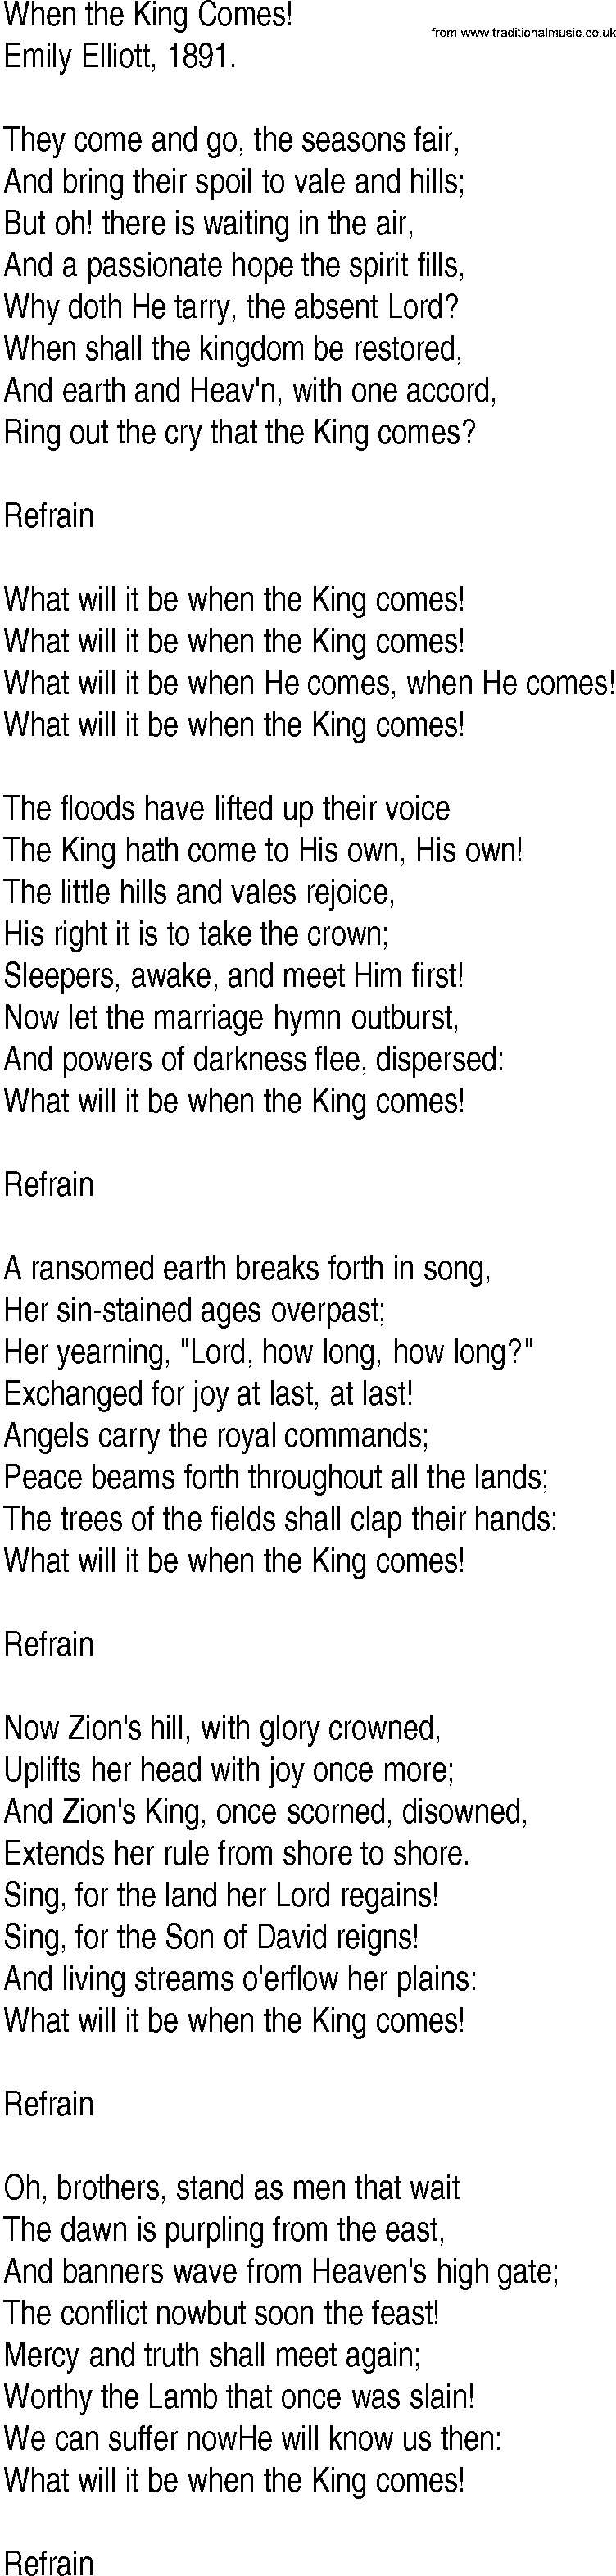 Hymn and Gospel Song: When the King Comes! by Emily Elliott lyrics